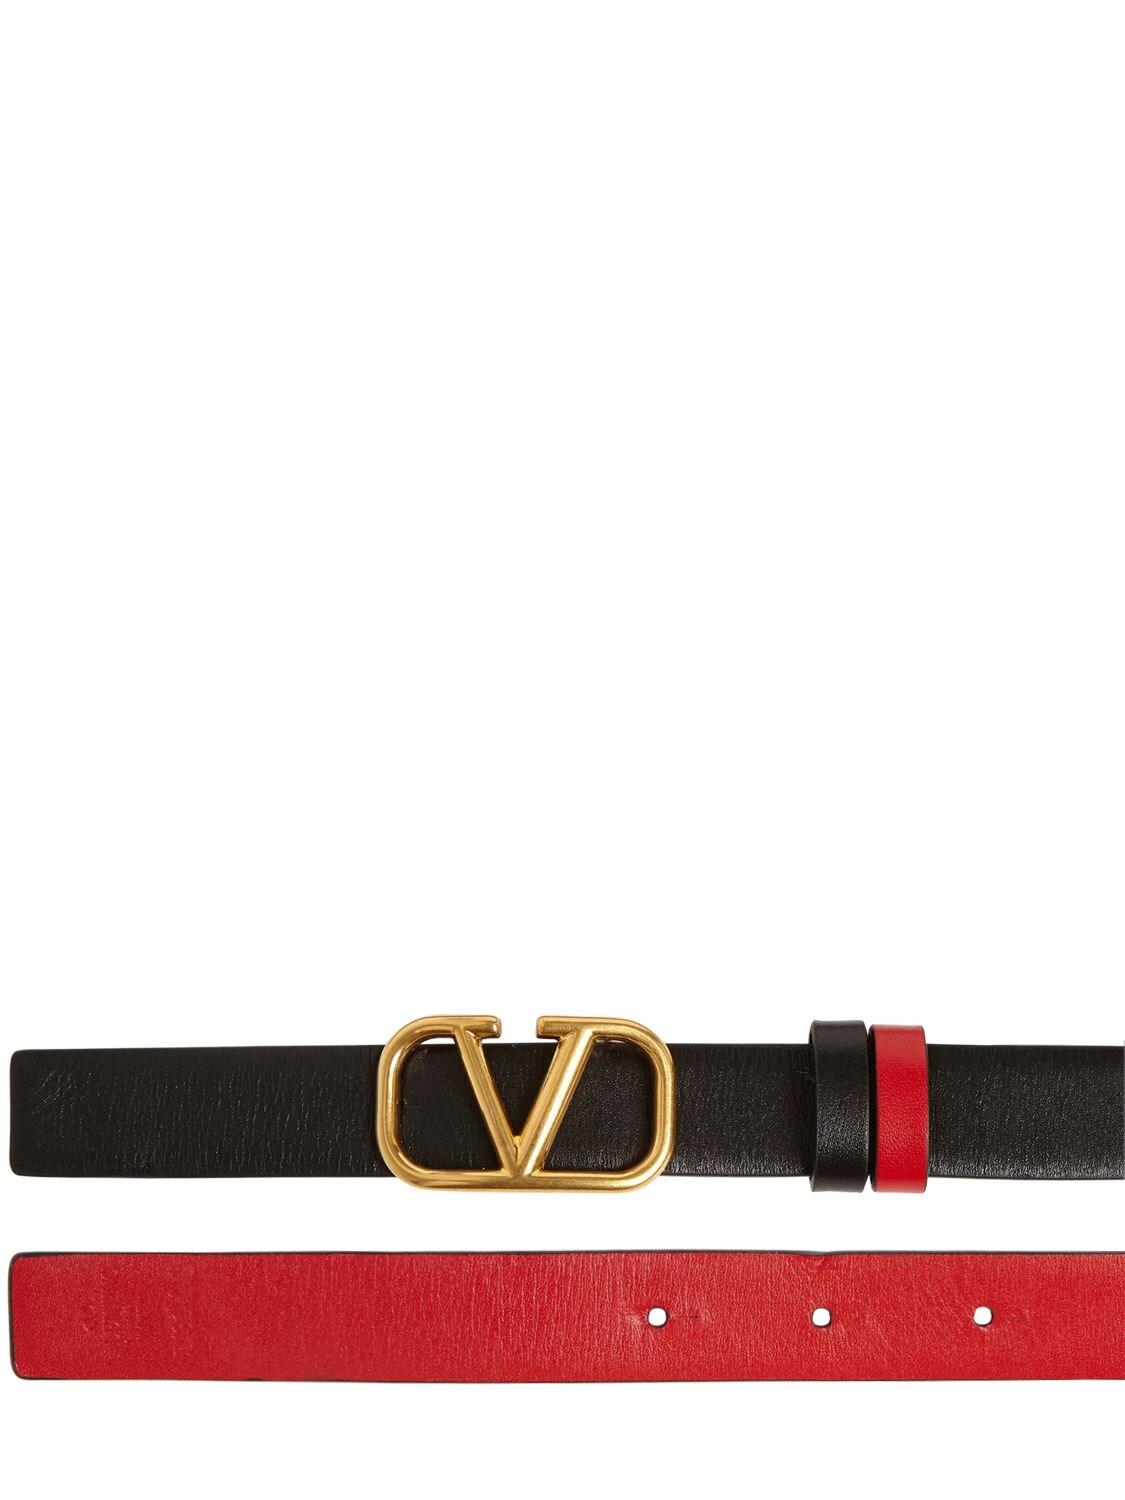 Valentino Garavani Valentino Reversible Logo Leather Belt in Black/Red (Black) Lyst